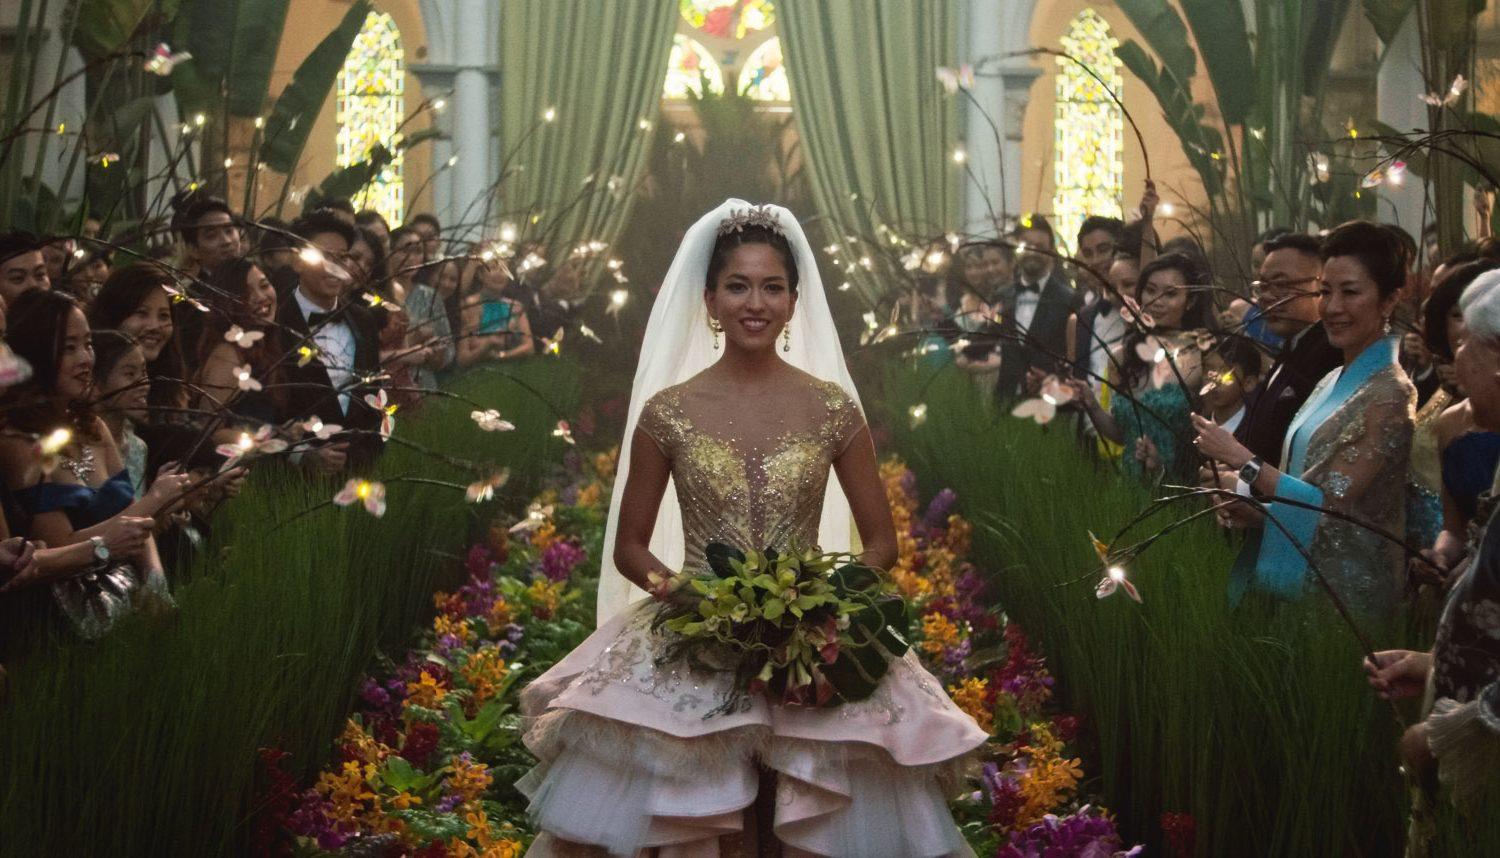 Woman in elaborate wedding dress waking down aisle, greenery, people looking on